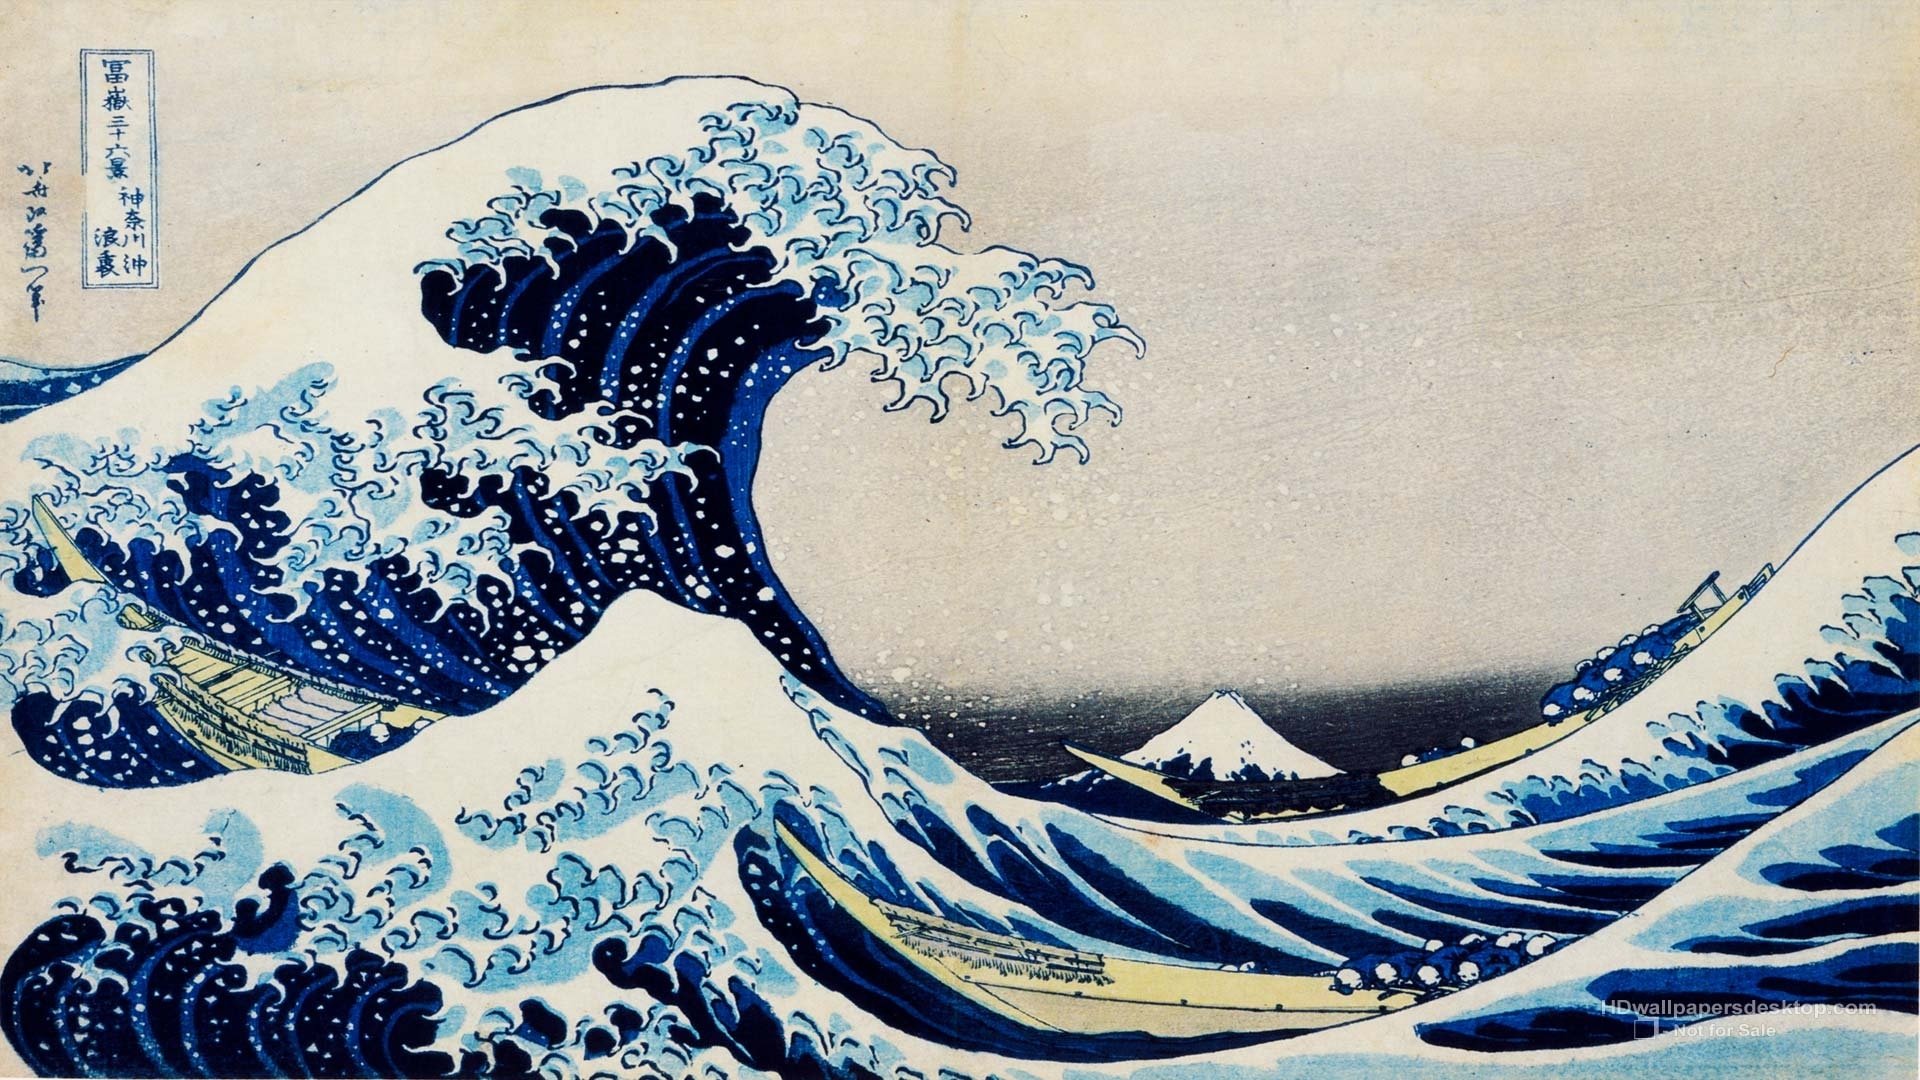 ocean waves anime style